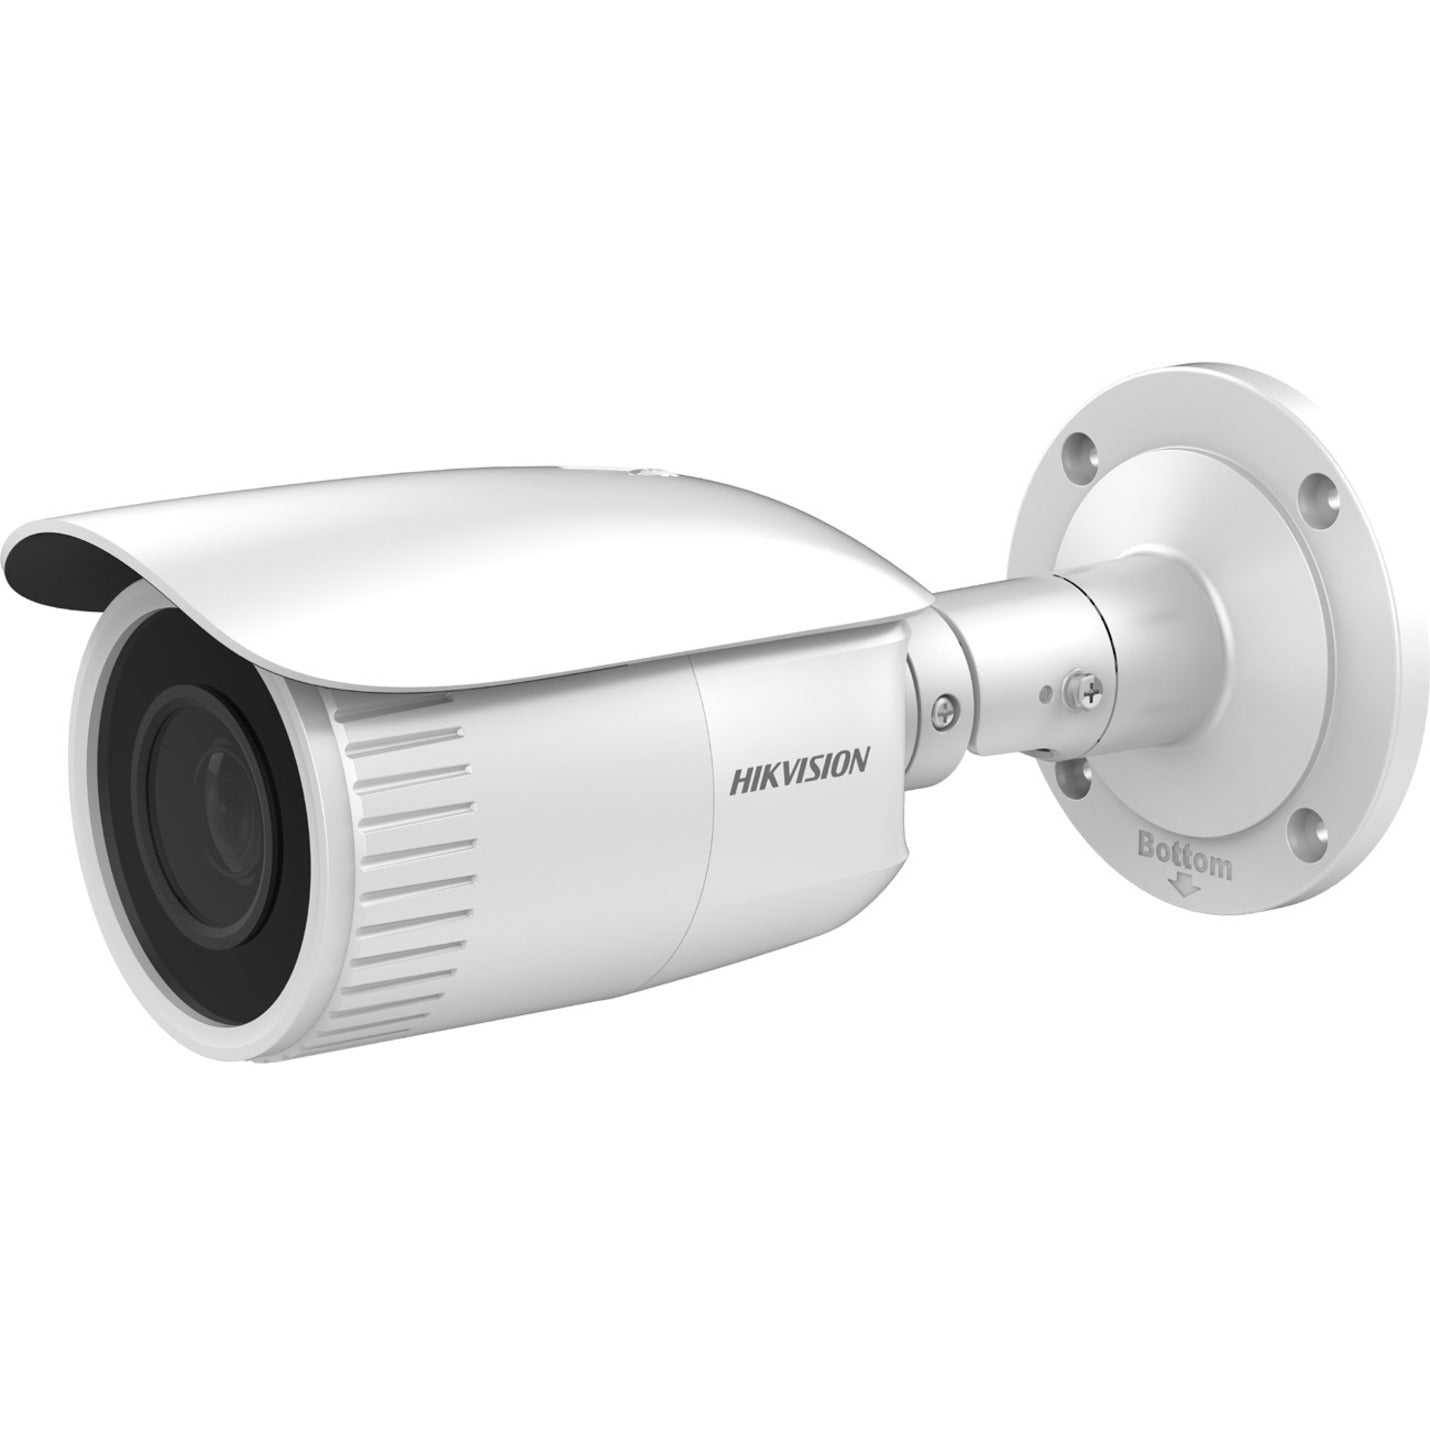 Hikvision ECI-B64Z2 4 MP Outdoor EXIR Varifocal Network Bullet Camera, 2.8-12mm Motorized Zoom, Day/Night, DWDR